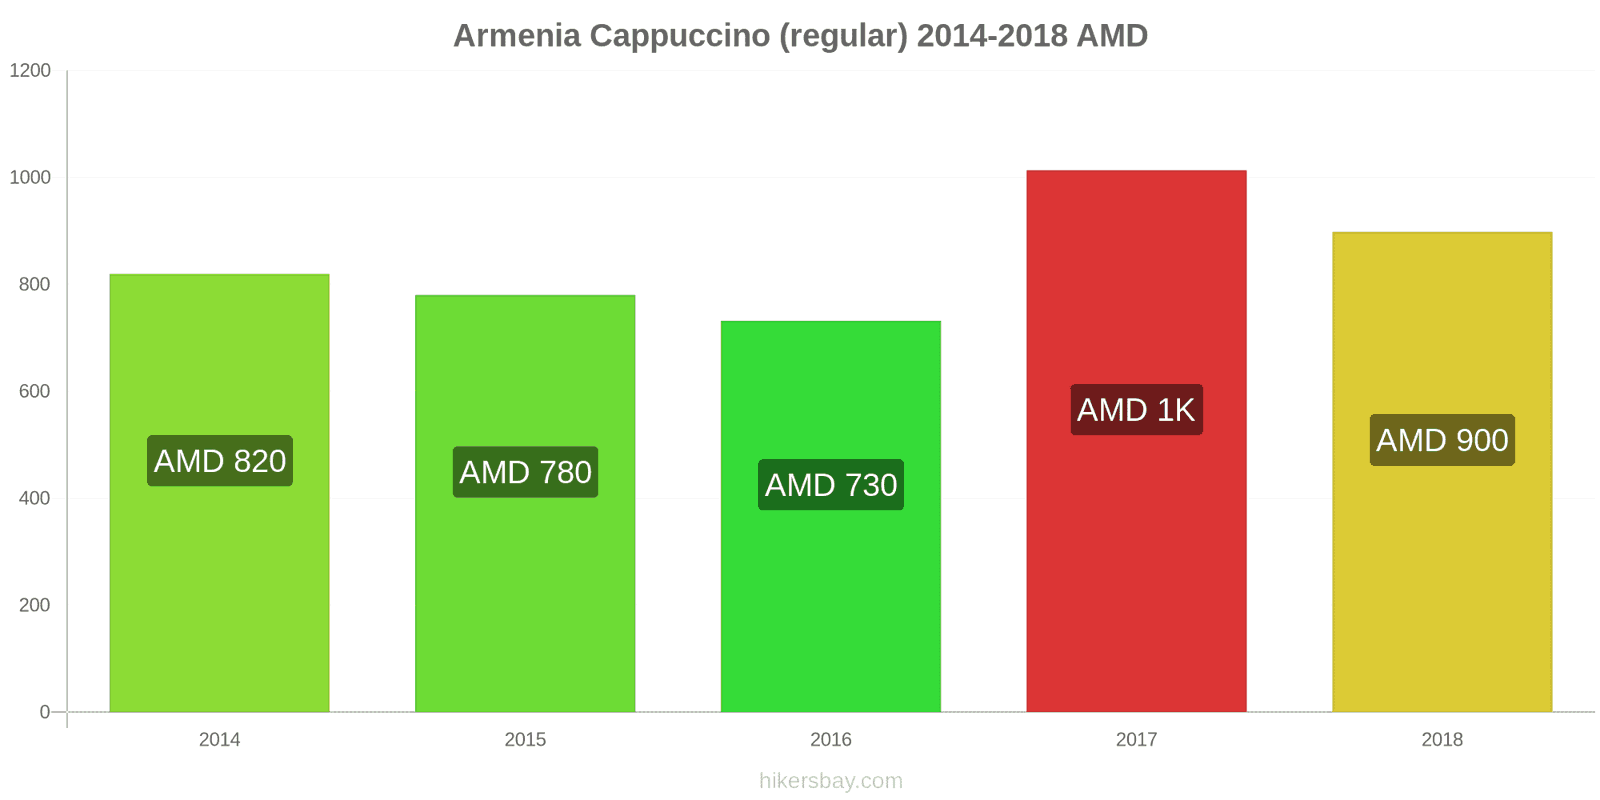 Armenia price changes Cappuccino hikersbay.com